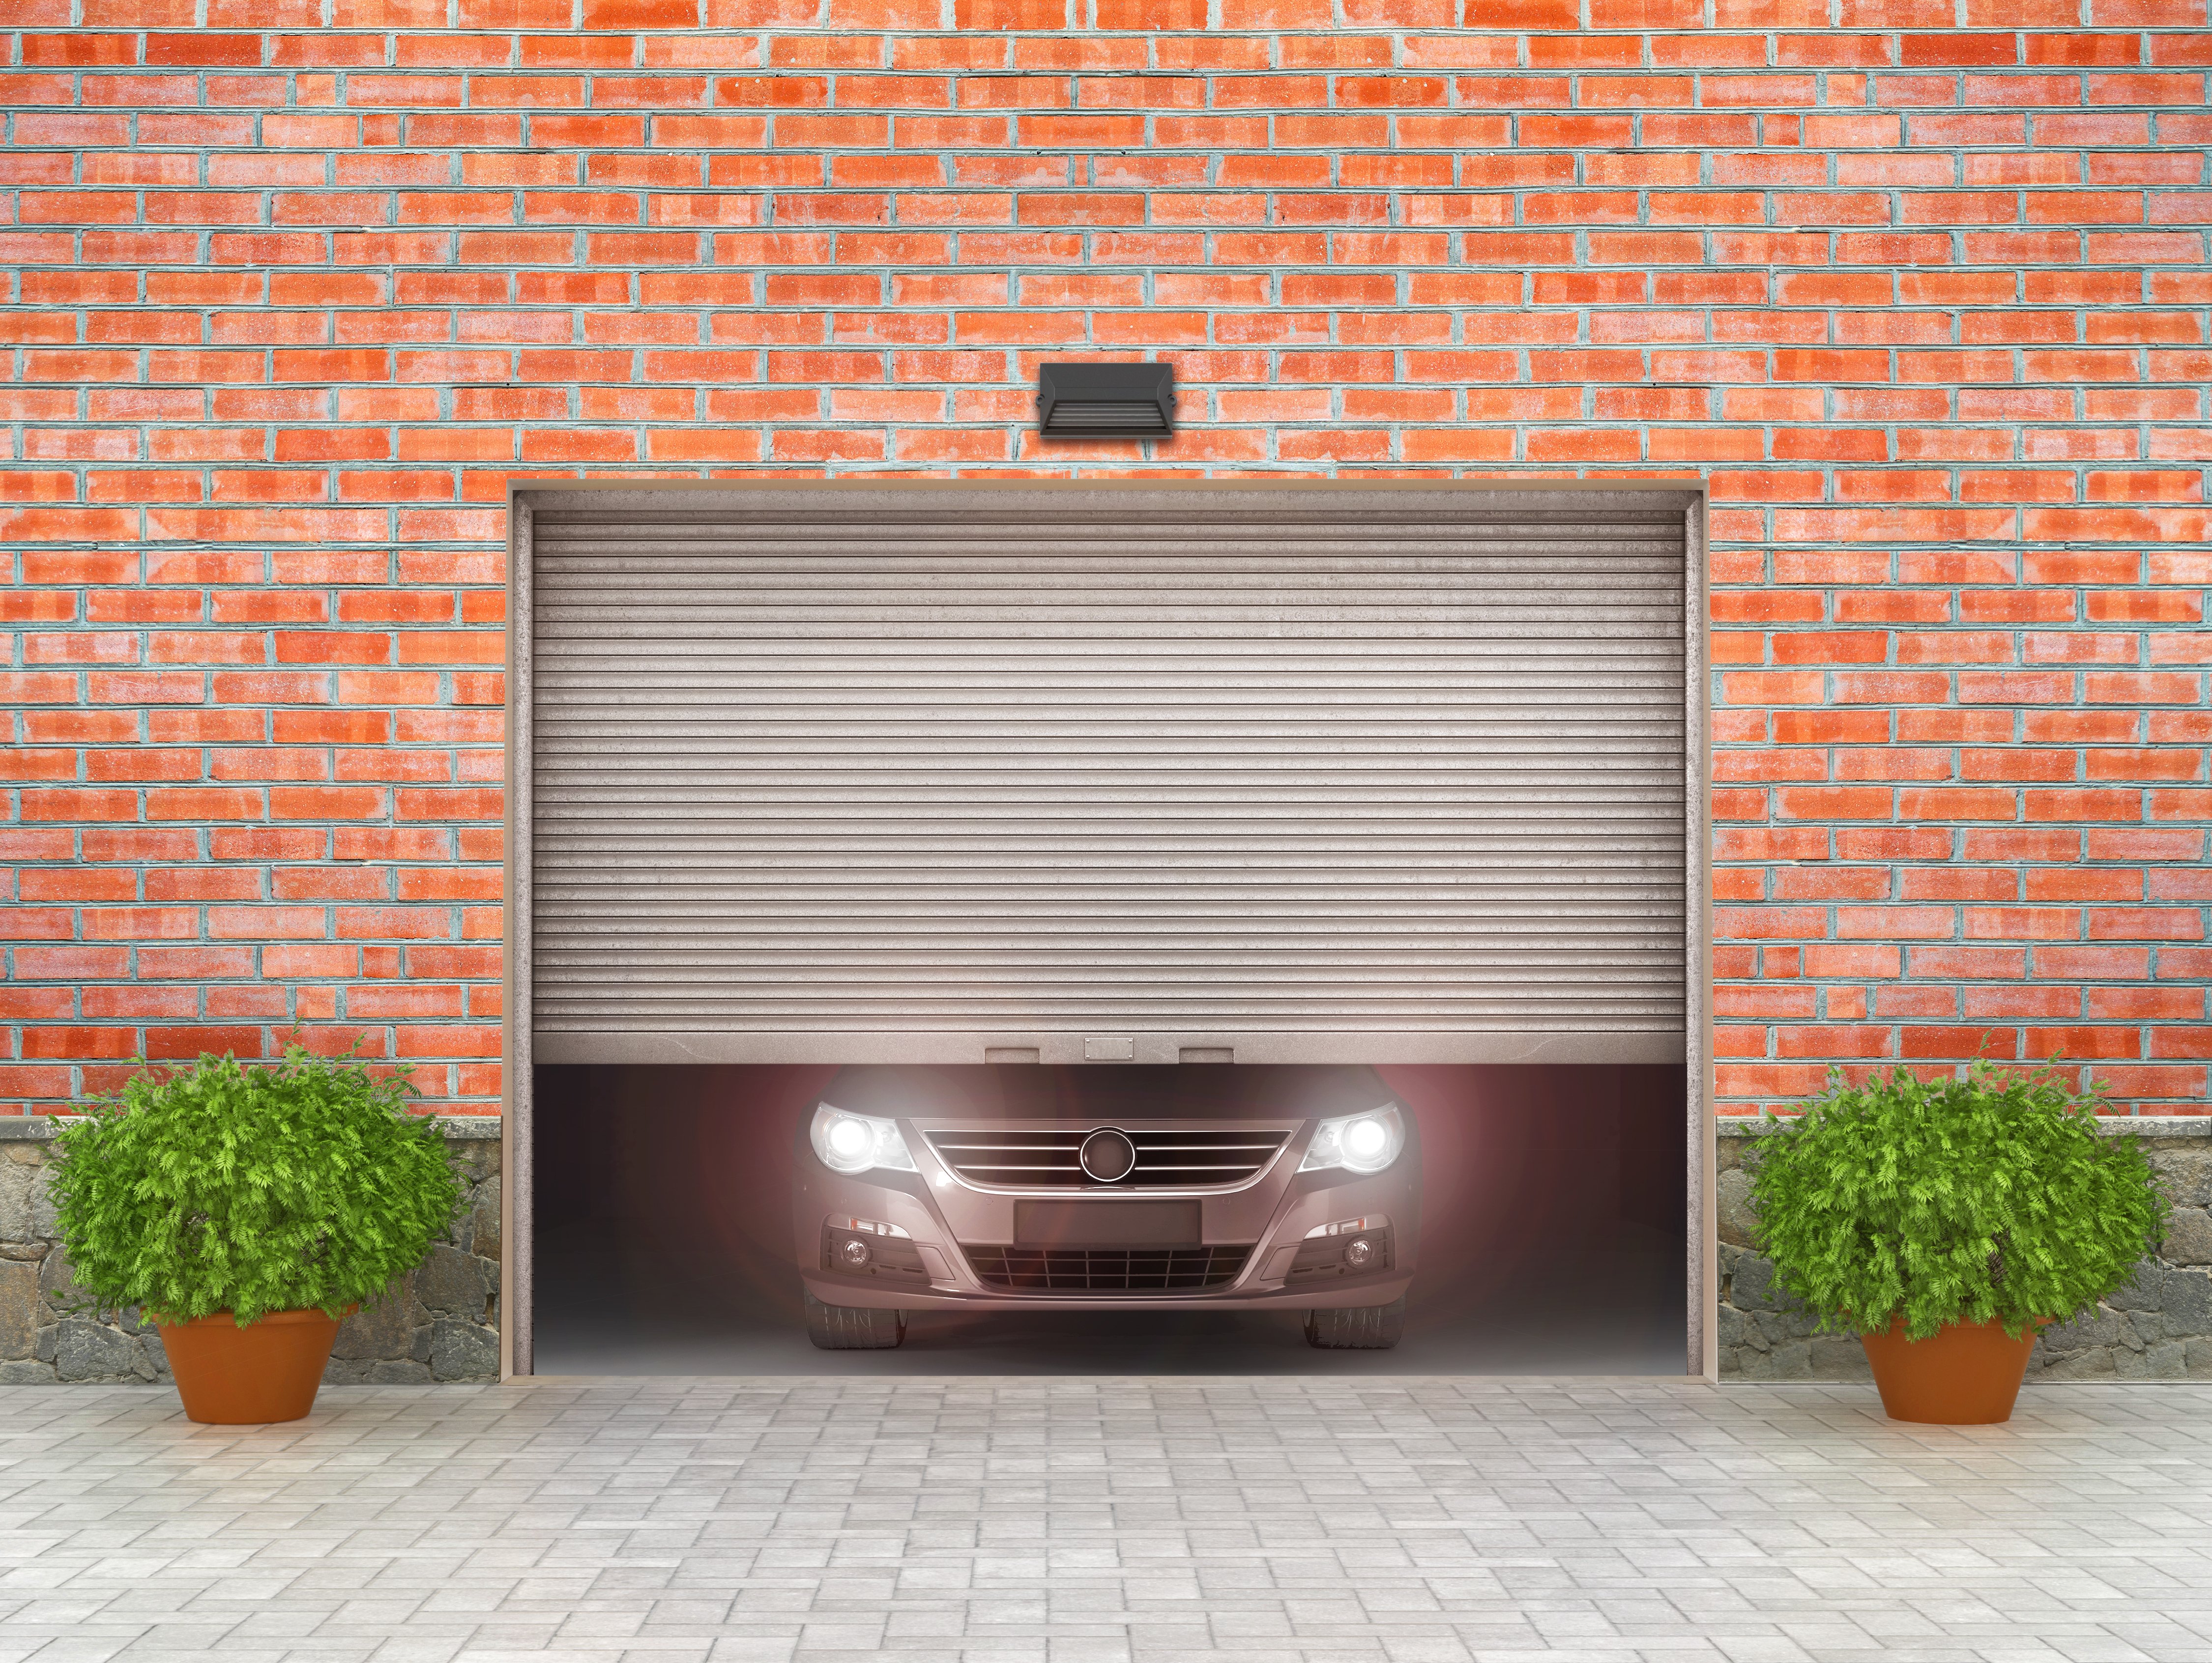 Garage door opening with a car behind it